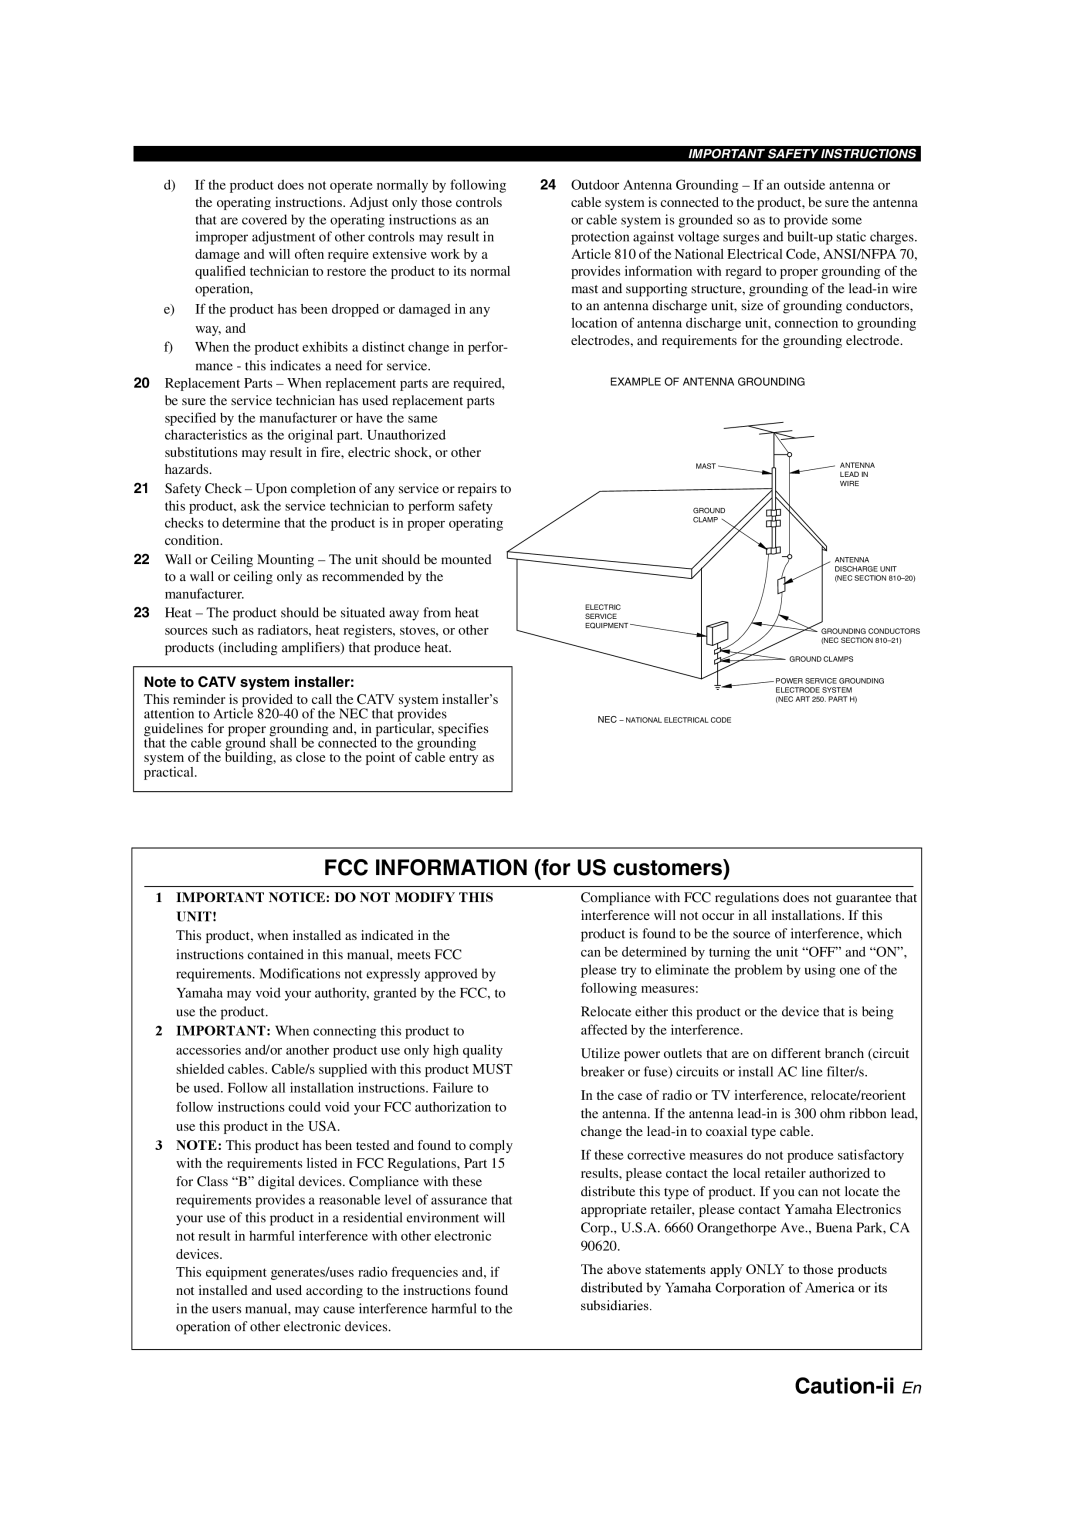 Yamaha HTR-6130 owner manual FCC INFORMATION for US customers, Caution-ii En, Note to CATV system installer 